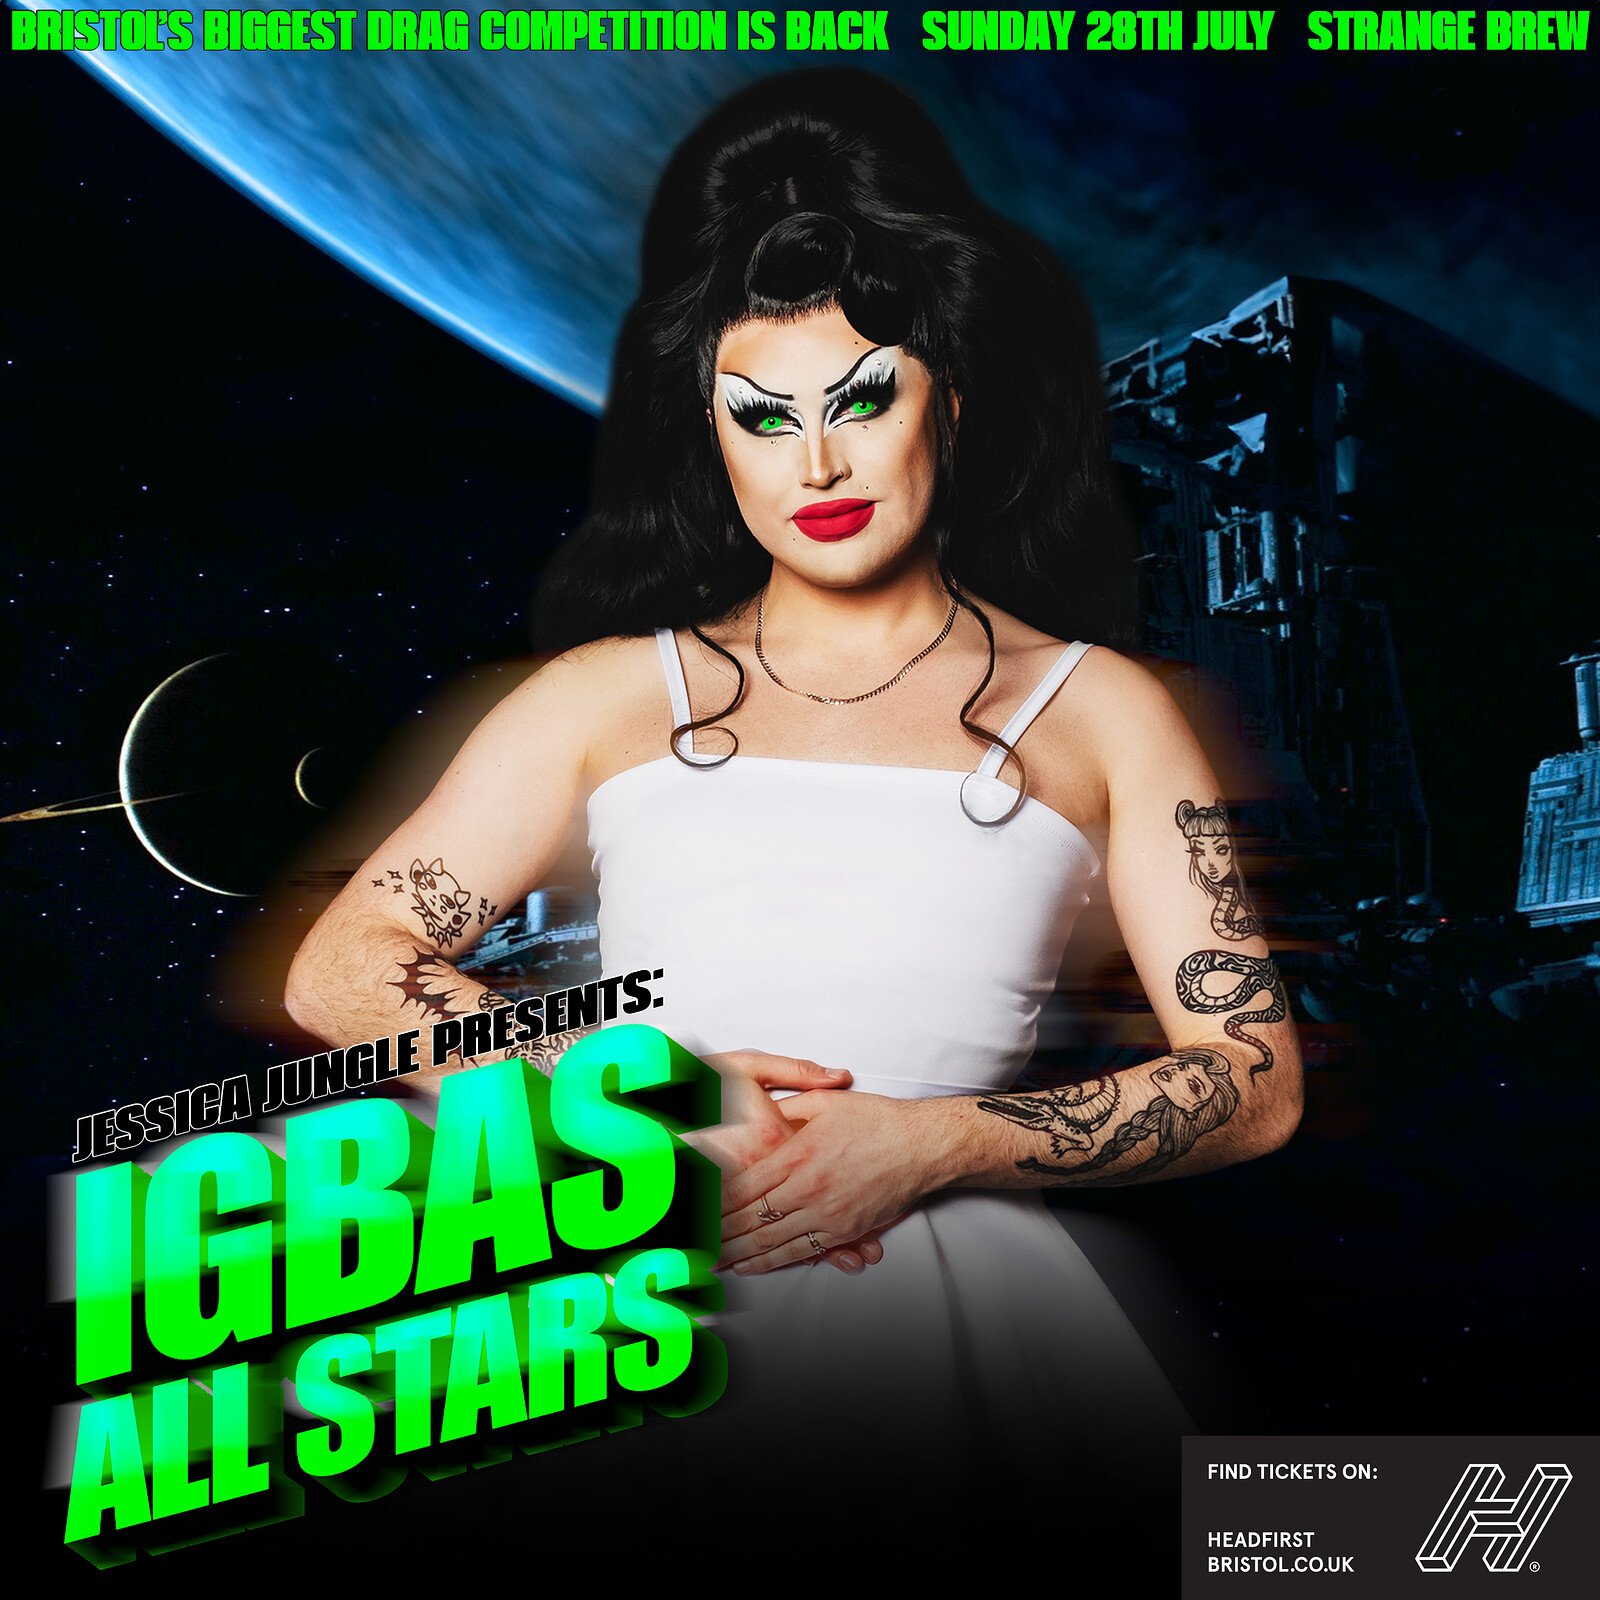 Jessica Jungle Presents: IGBAS All Stars at Strange Brew